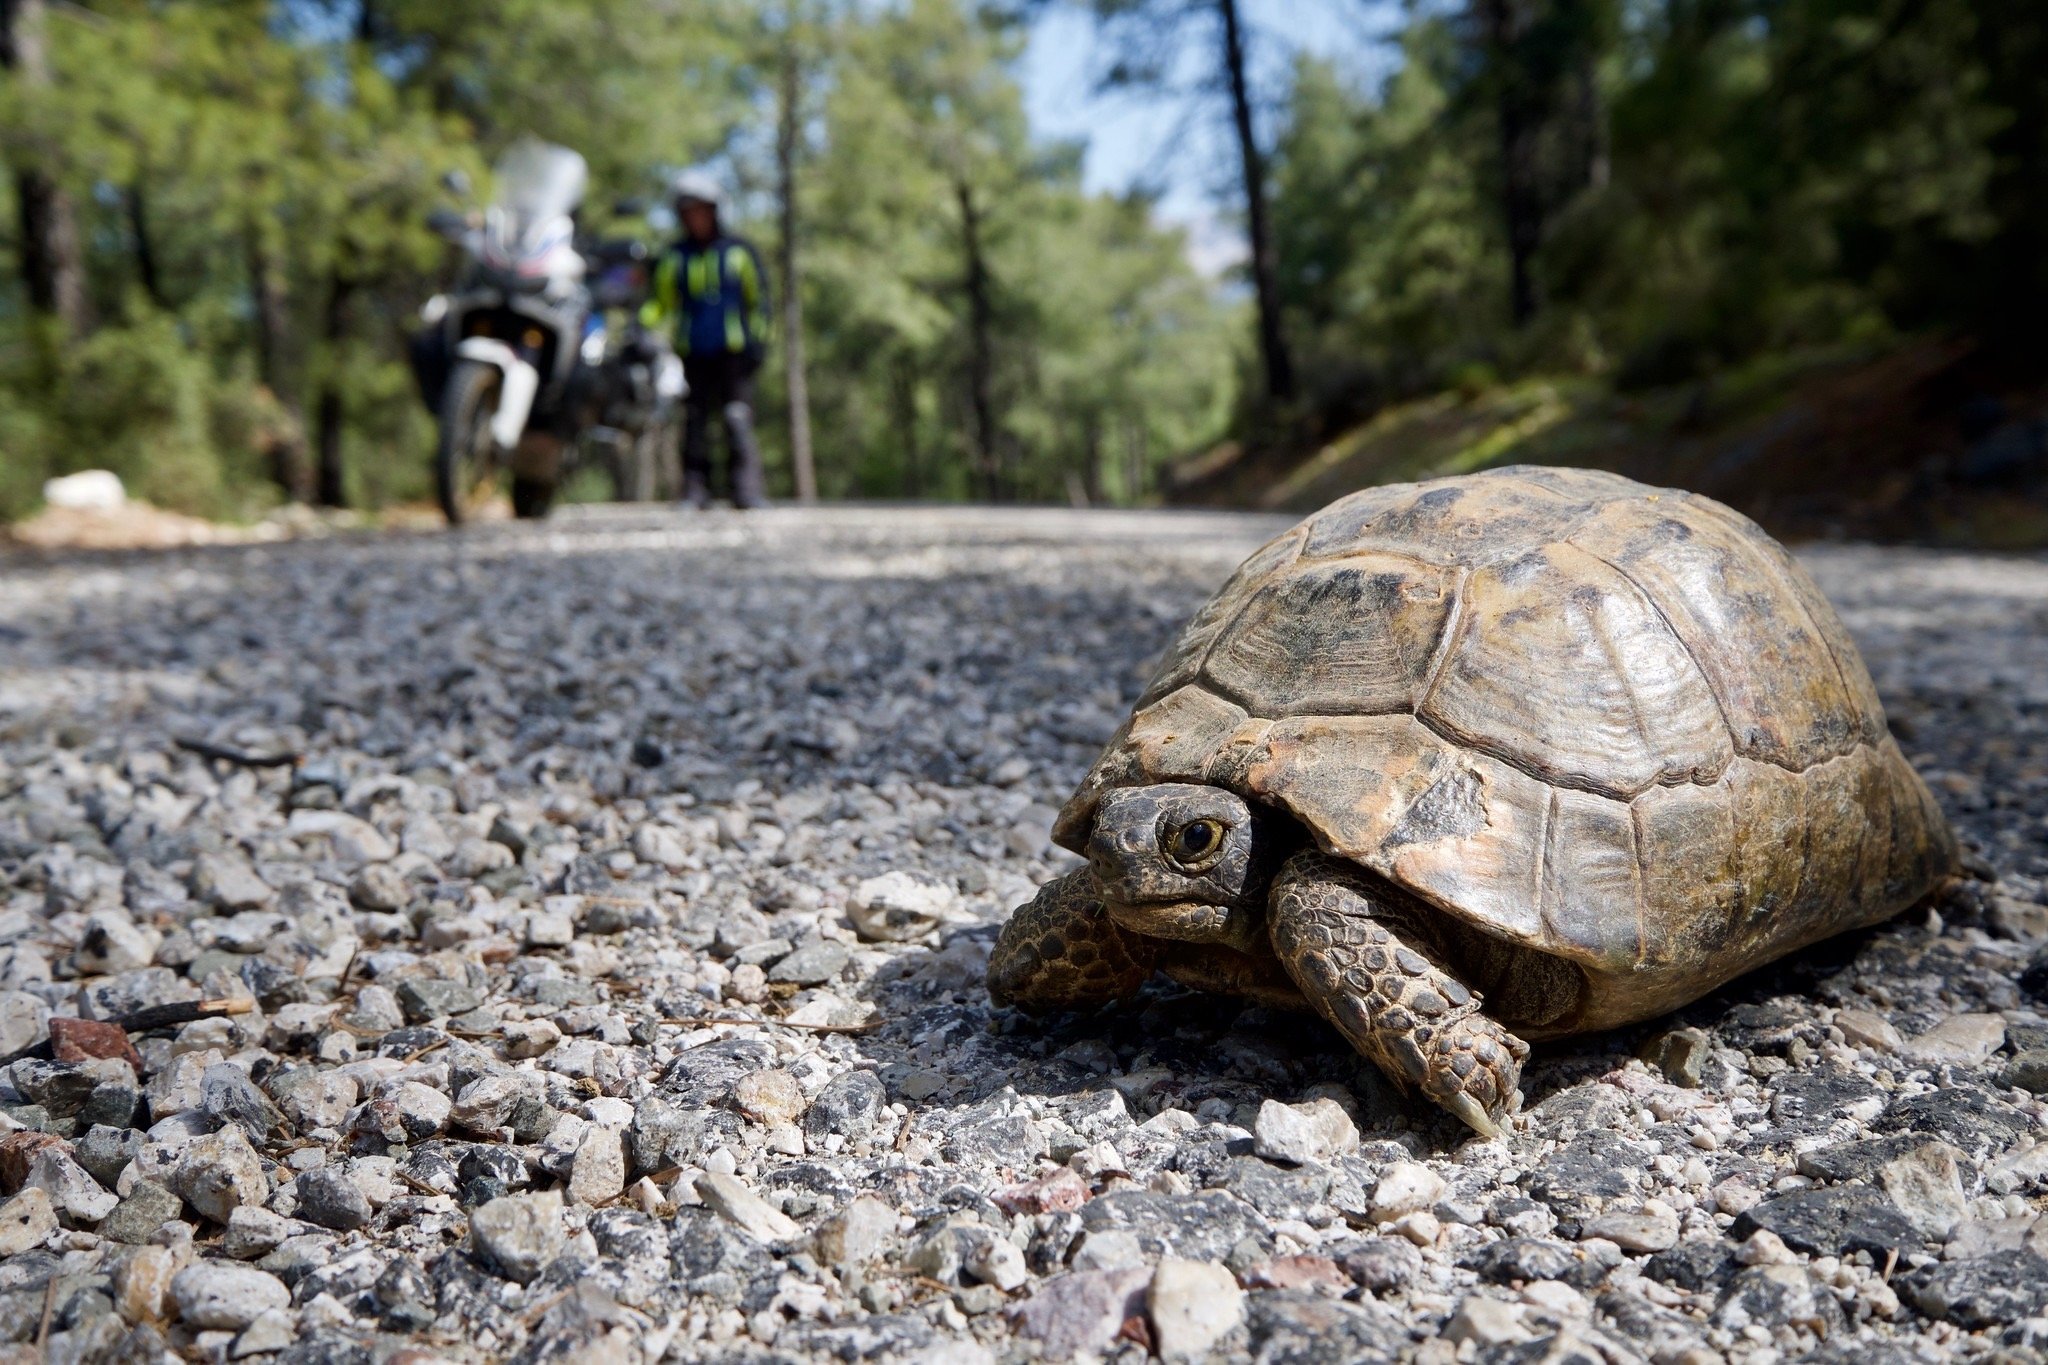  Tortoise on the road in Turkey 